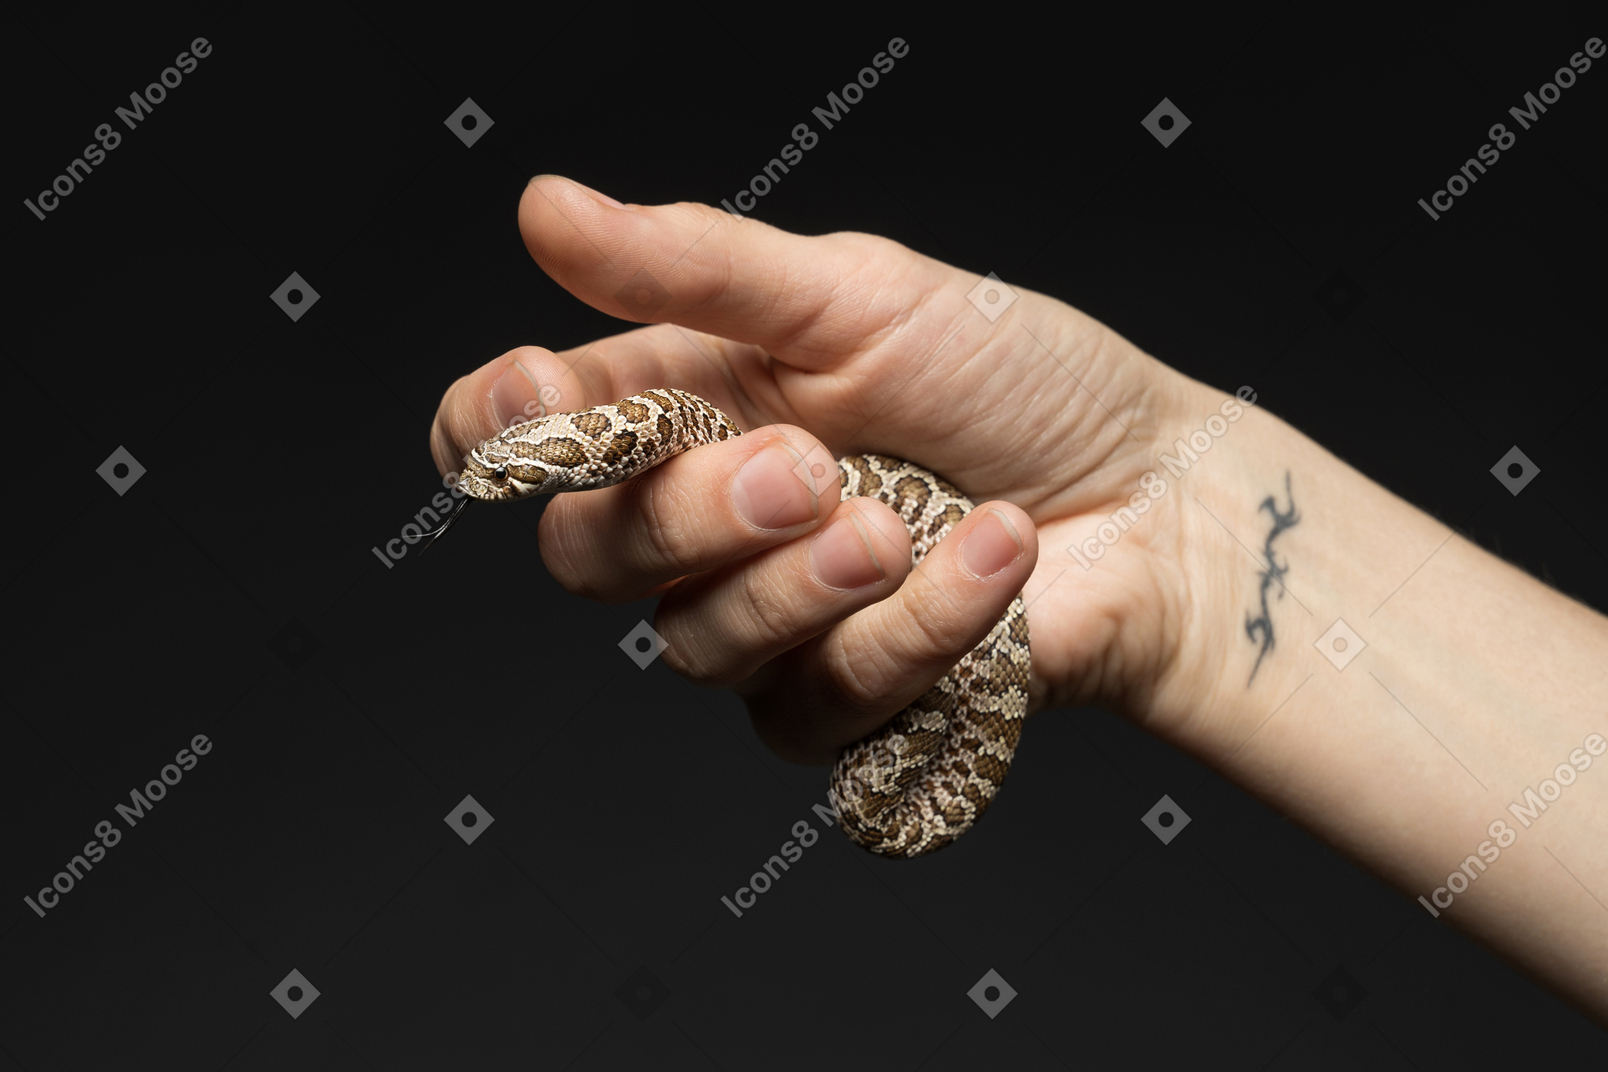 Little corn snake in human hand